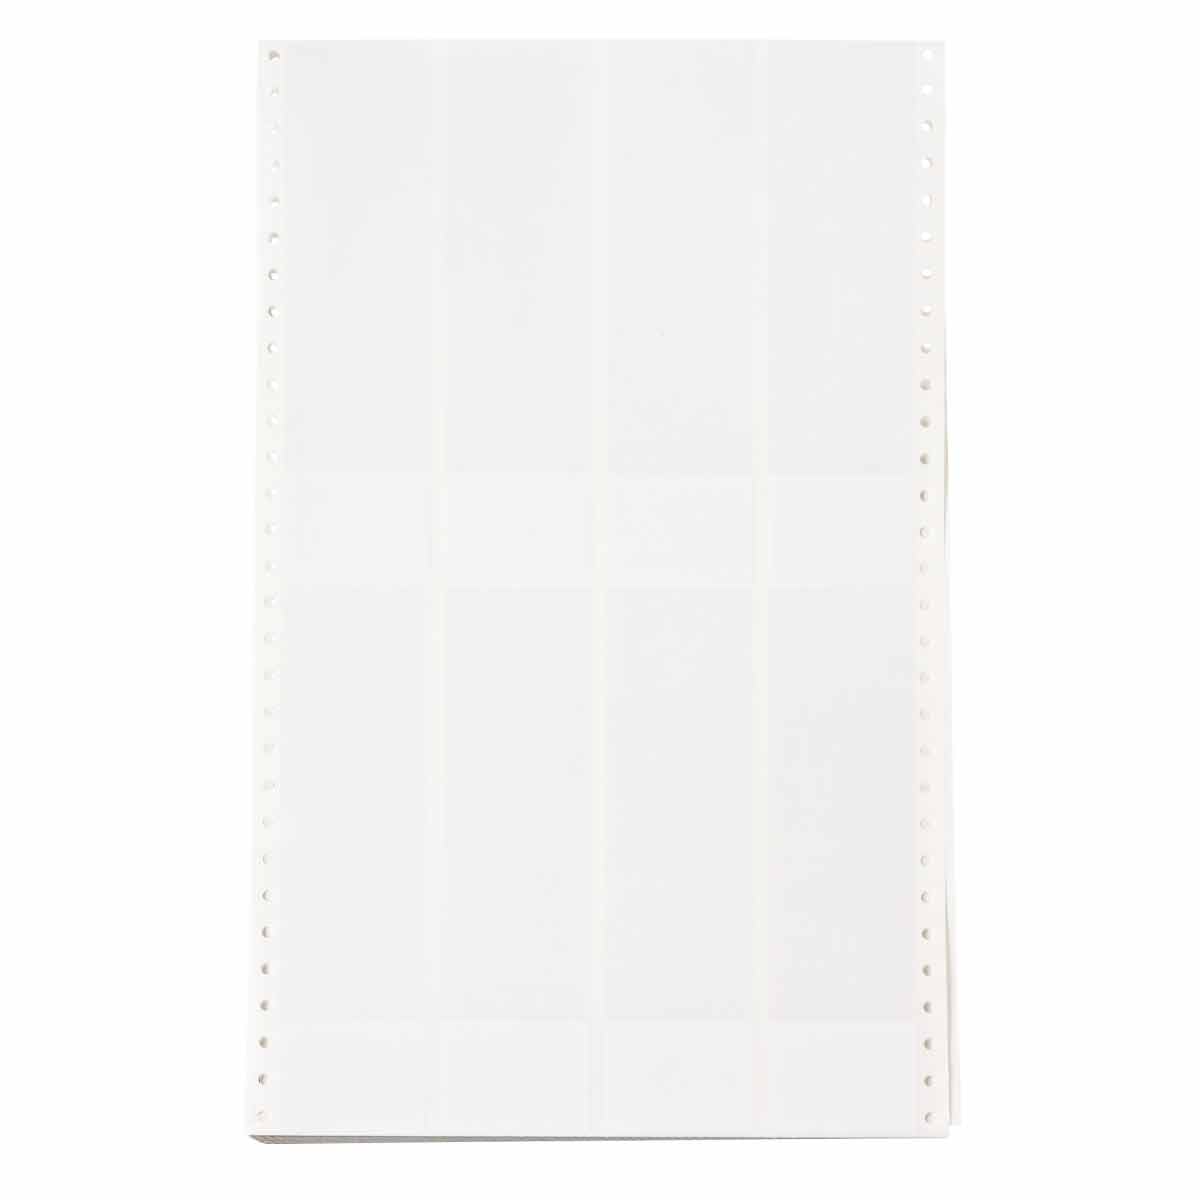 Matte Finish White/Translucent Datab Dot Matrix Printable Label Pack of 1000 Brady DAT-145-292-1 0.5 Width x 0.937 Height B-292 Self-Laminating Vinyl 